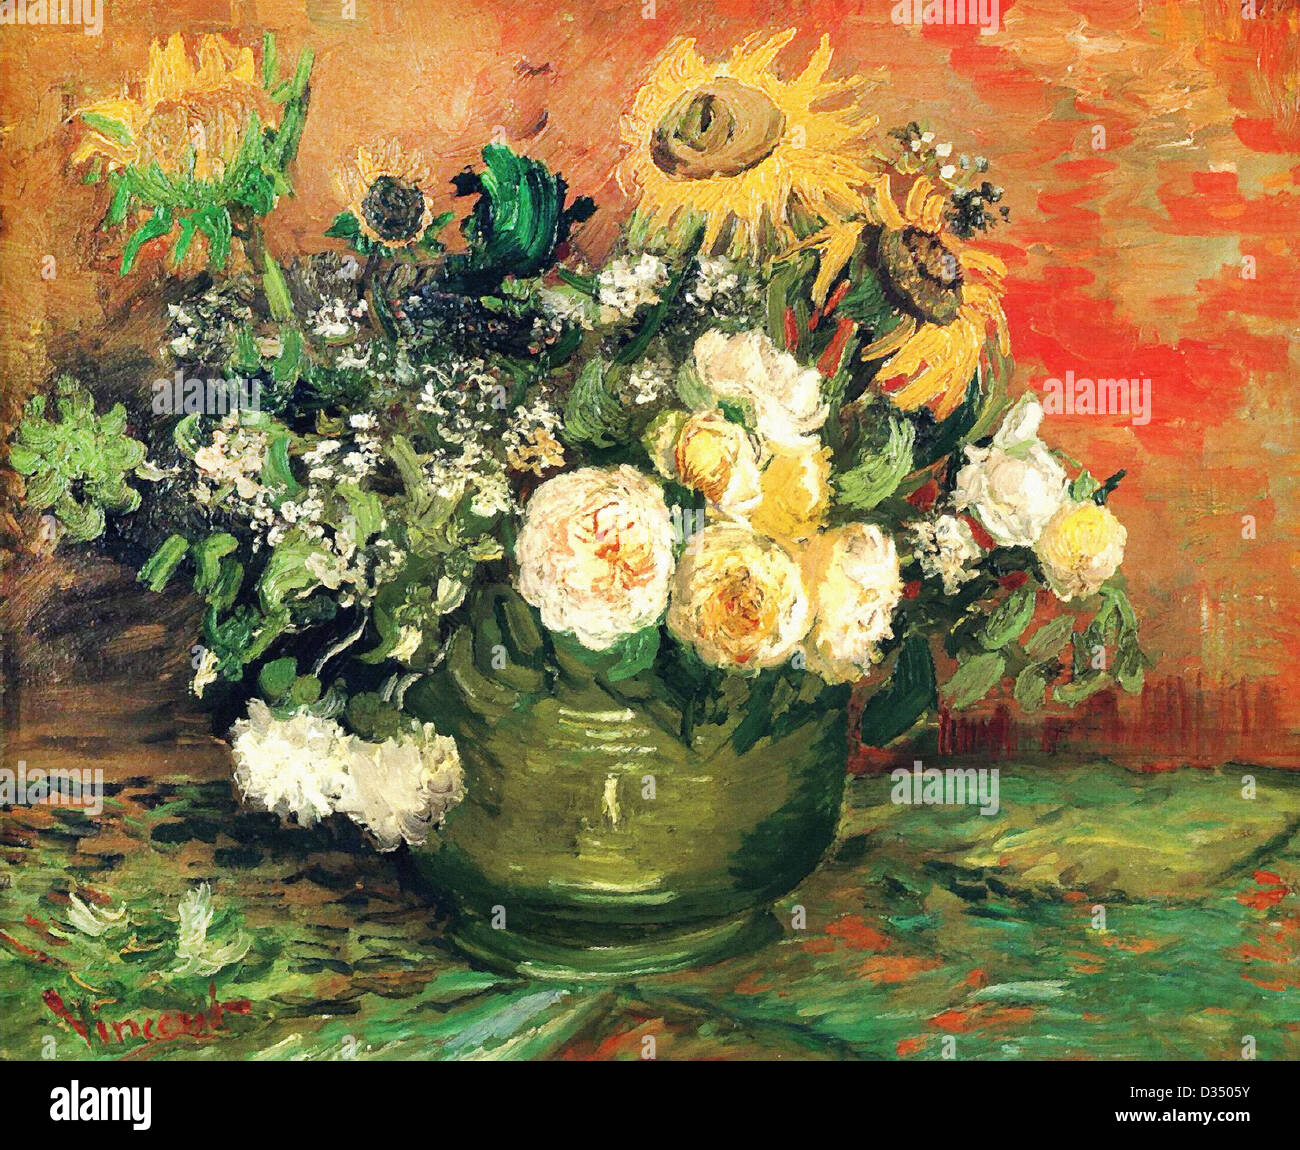 Vincent van Gogh, Bodegón con rosas y girasoles. 1886. Posimpresionismo. Óleo sobre lienzo. Stadtische Kunsthalle de Mannheim Foto de stock